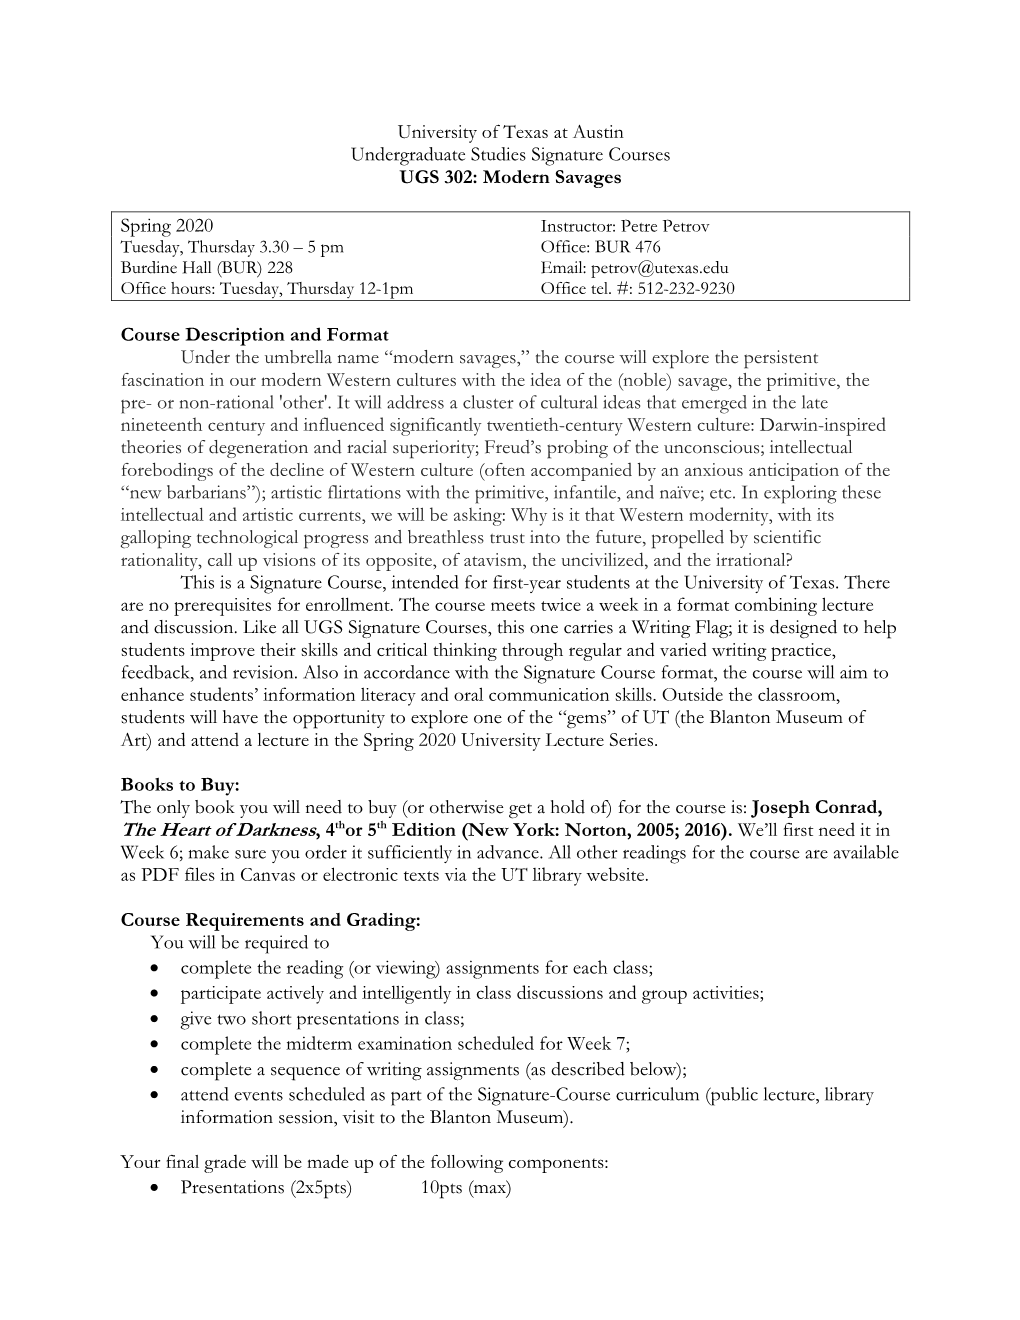 University of Texas at Austin Undergraduate Studies Signature Courses UGS 302: Modern Savages Spring 2020 Course Description